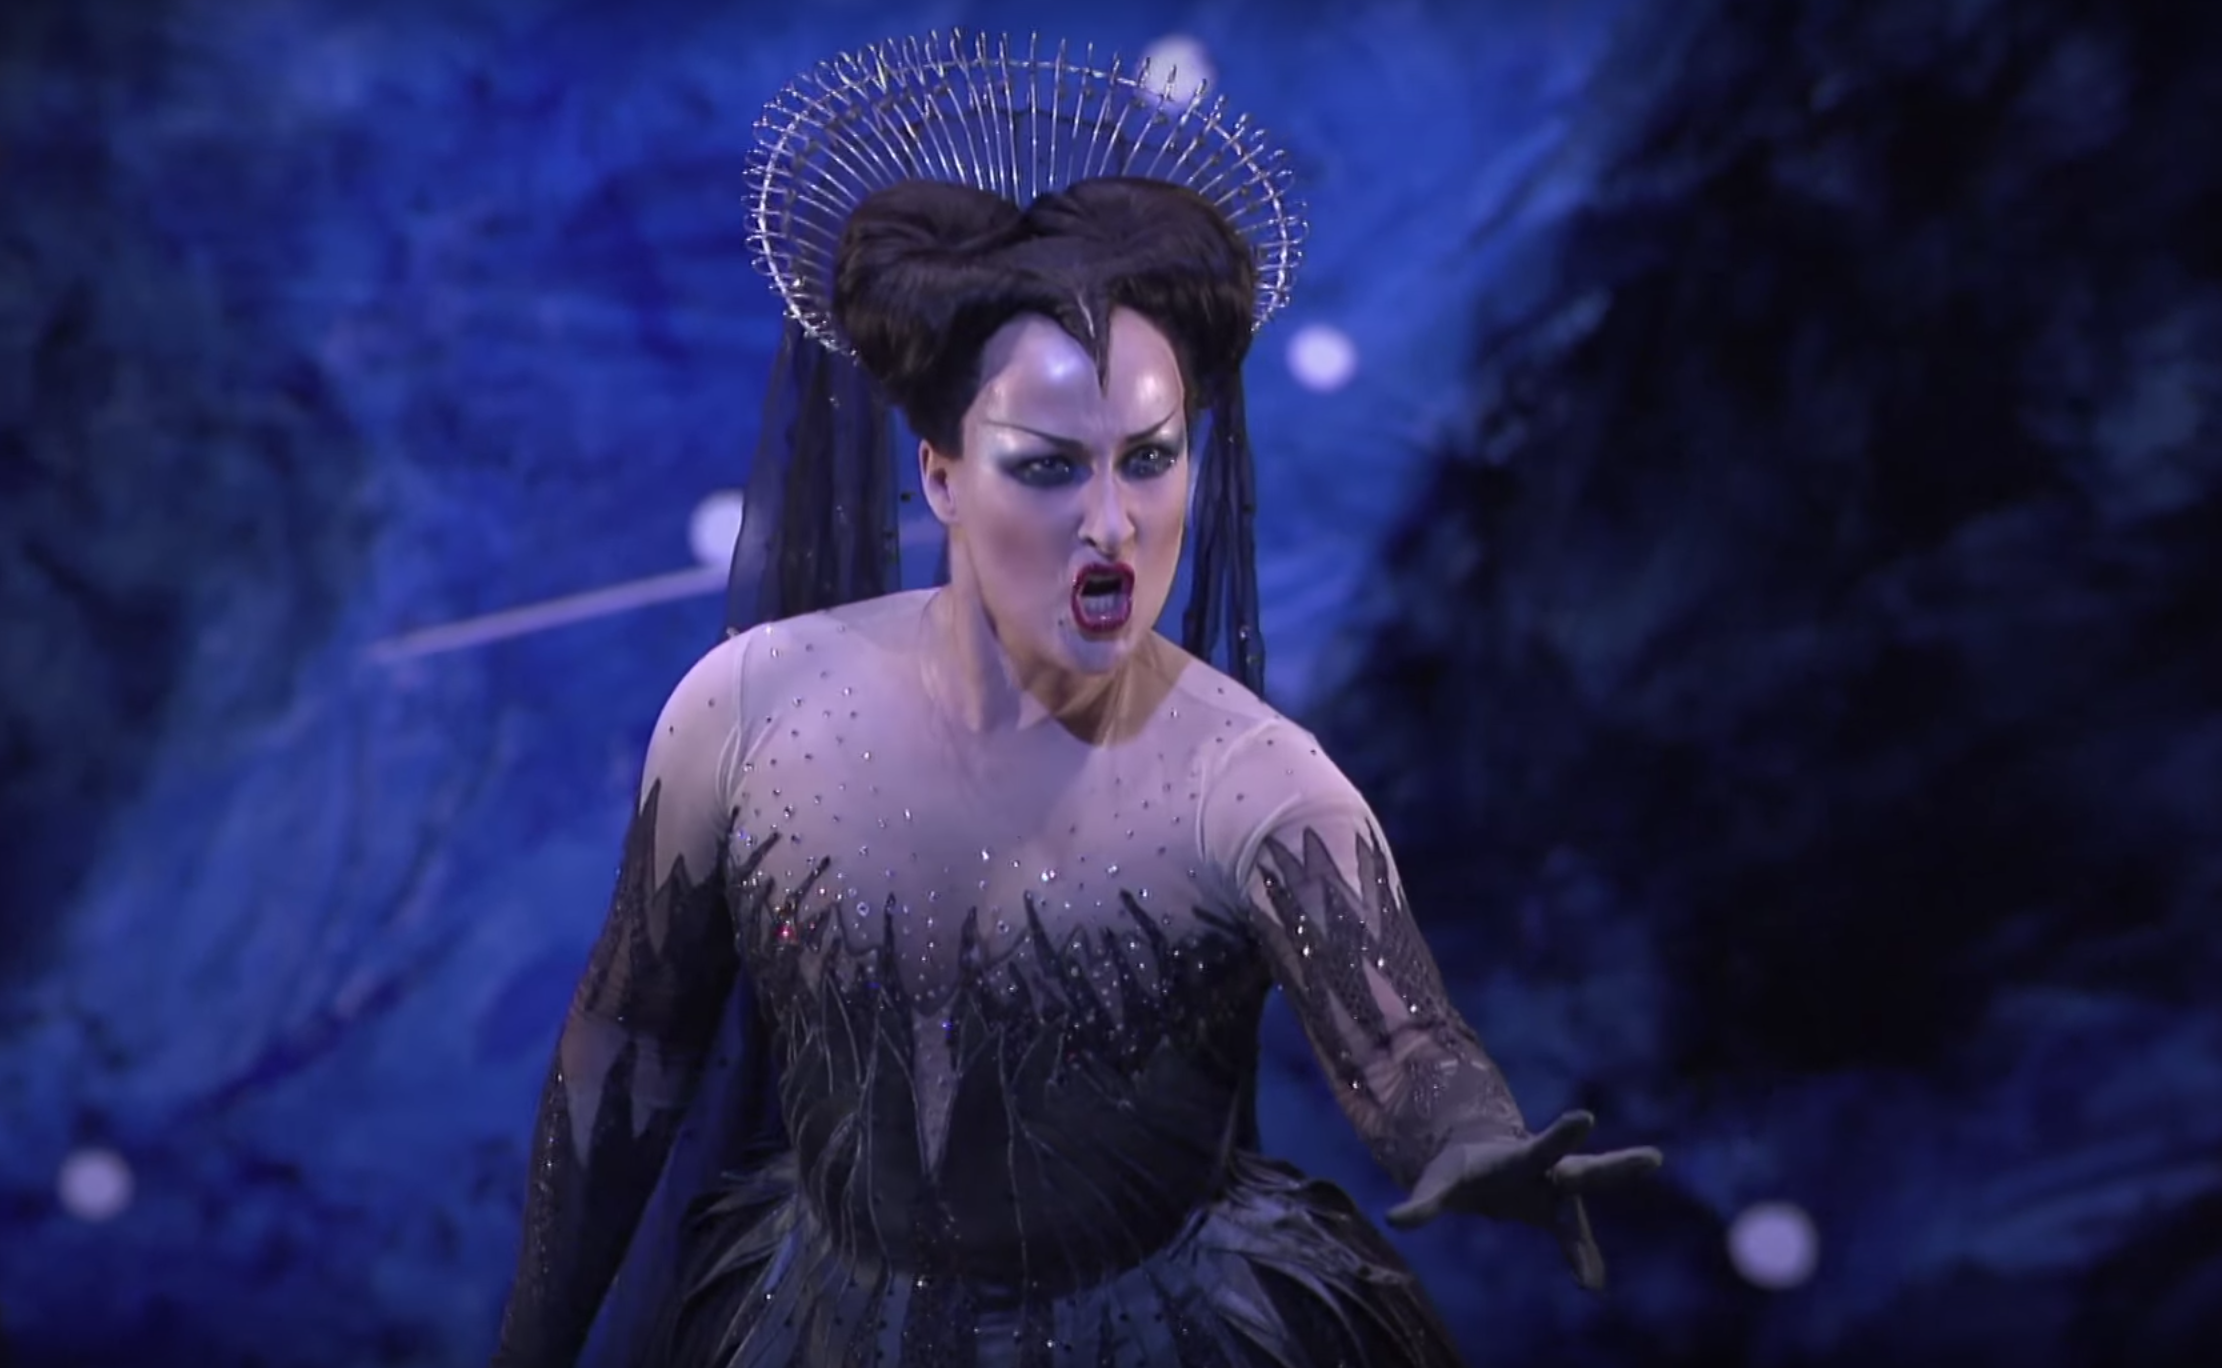 Königin der Nacht, Royal Opera House - Diana Damrau - Soprano